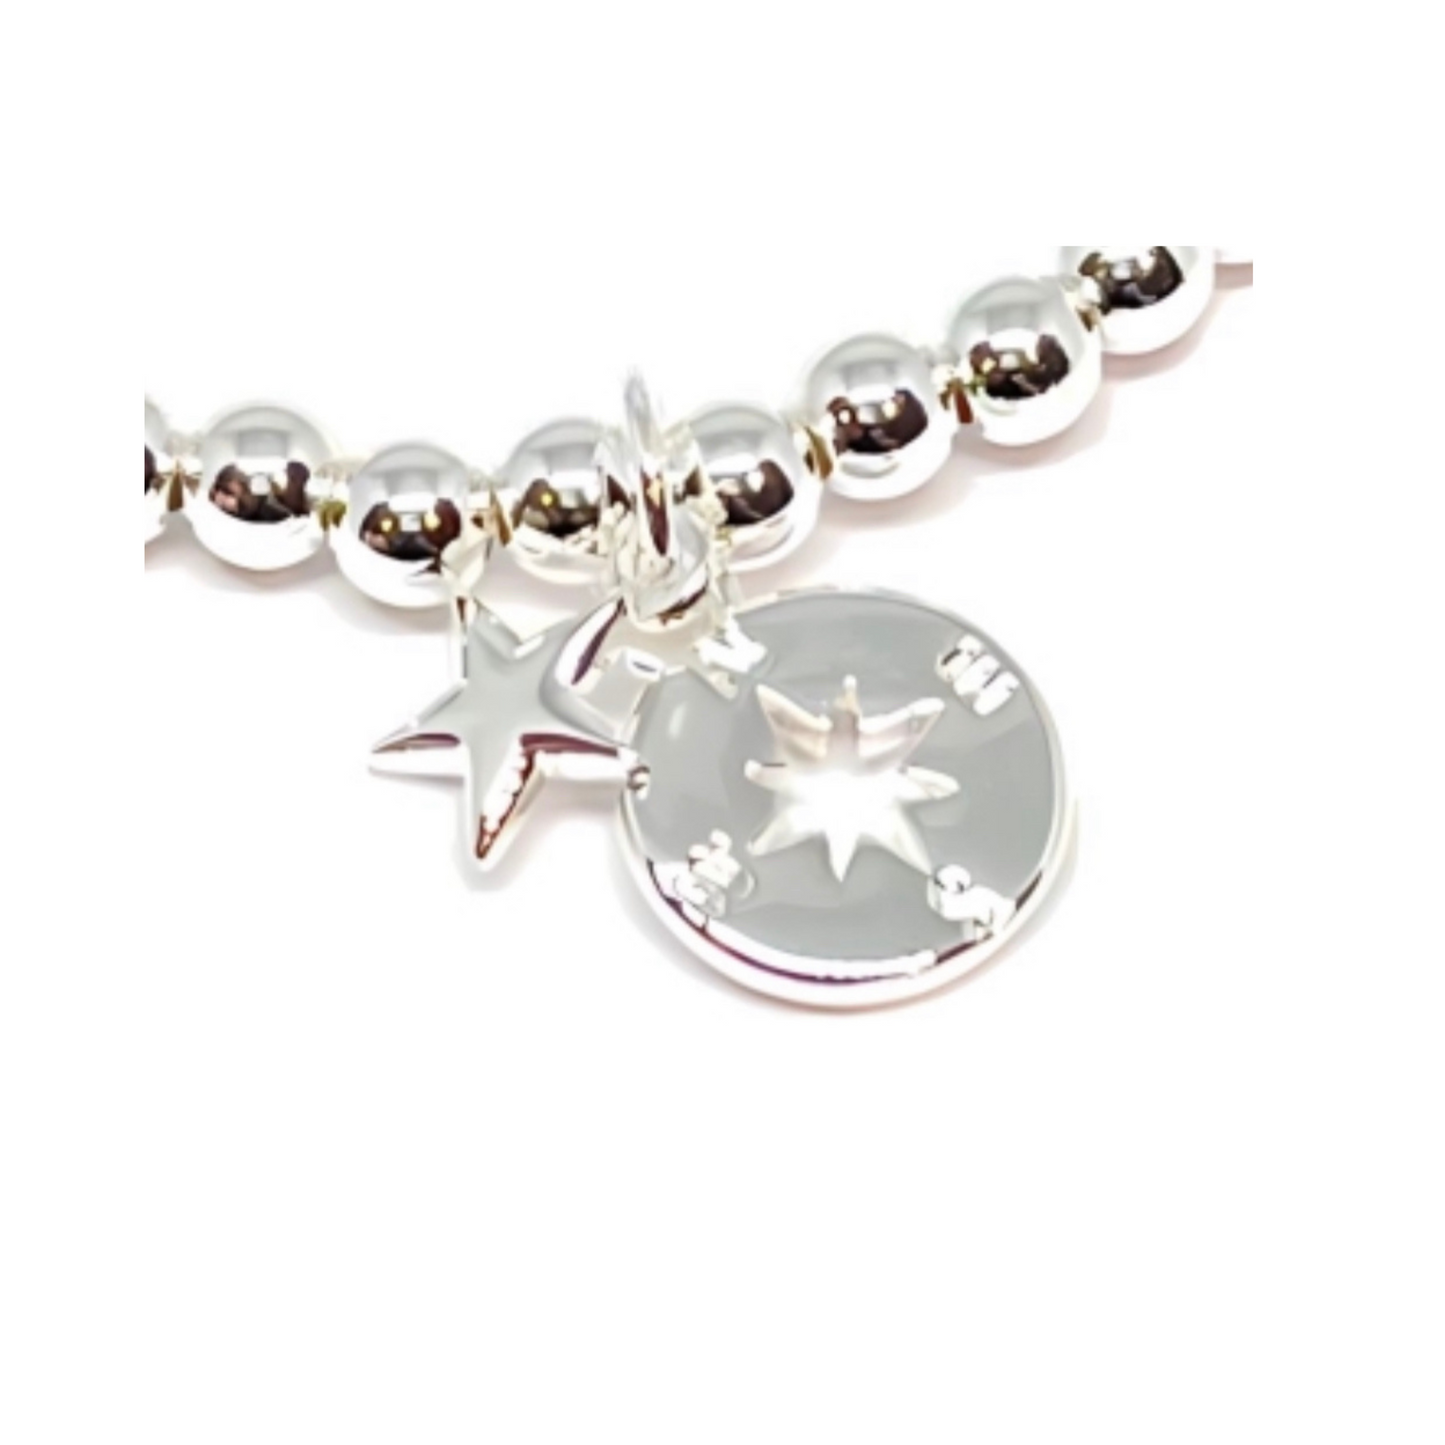 Estrella Star Ball Bracelet